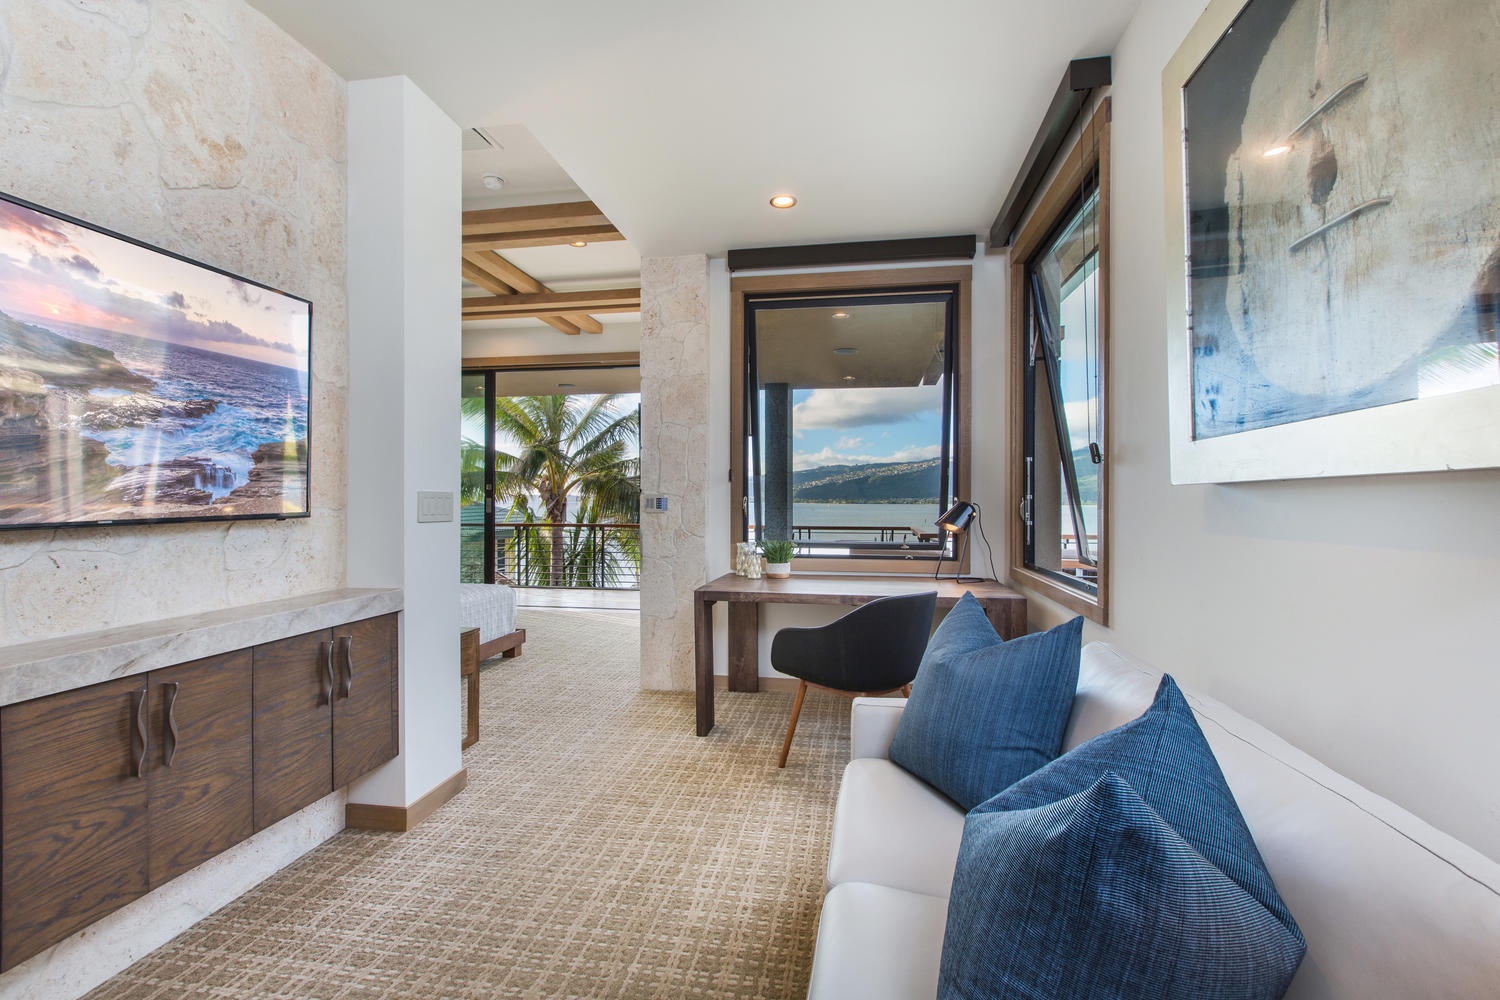 Honolulu Vacation Rentals, Ocean House - Second primary bedroom lounge.